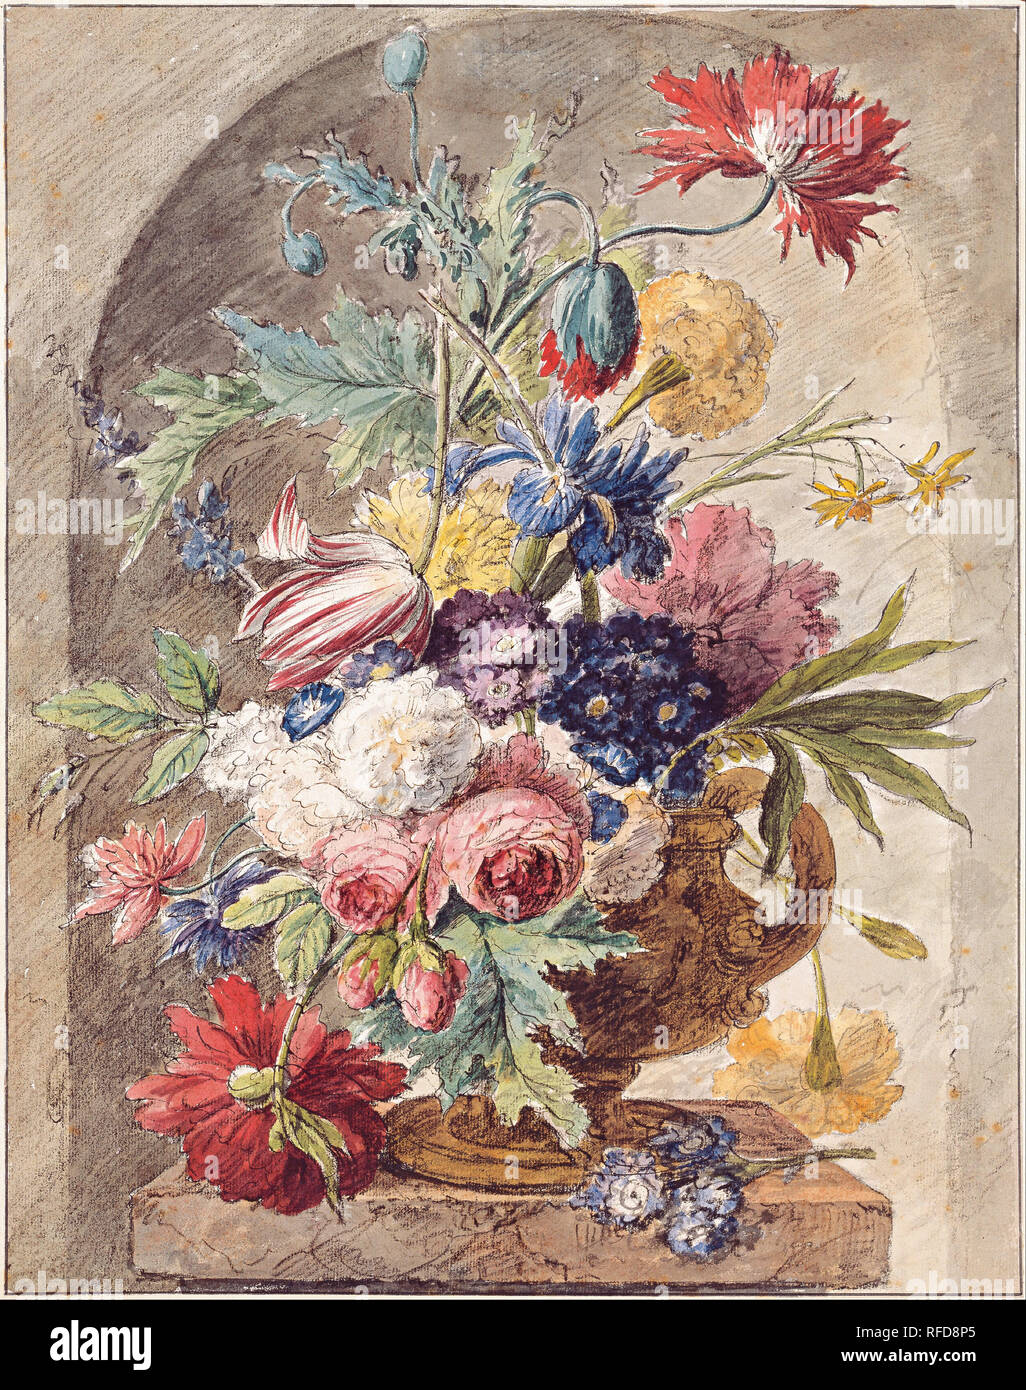 Flower Still Life, c. 1734. Date/Period: Ca. 1734. Drawing. Black chalk, pen and brown ink, watercolor. Author: JAN VAN HUYSUM. HUYSUM, JAN VAN. Stock Photo